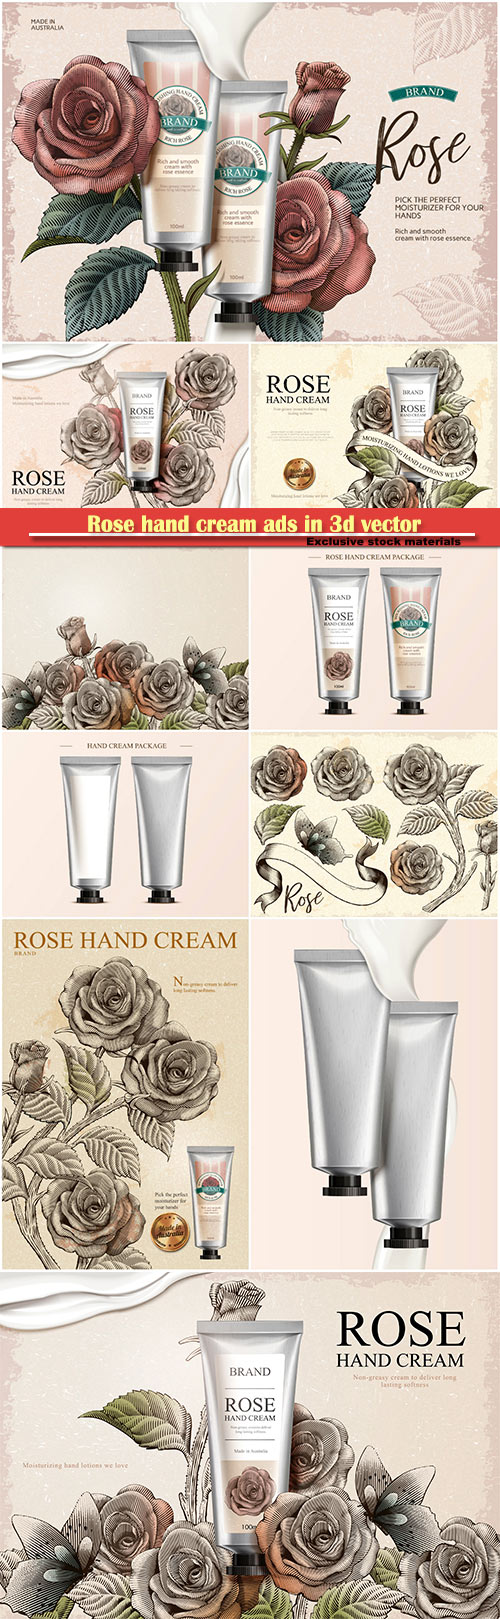 Rose hand cream ads in 3d vector illustration